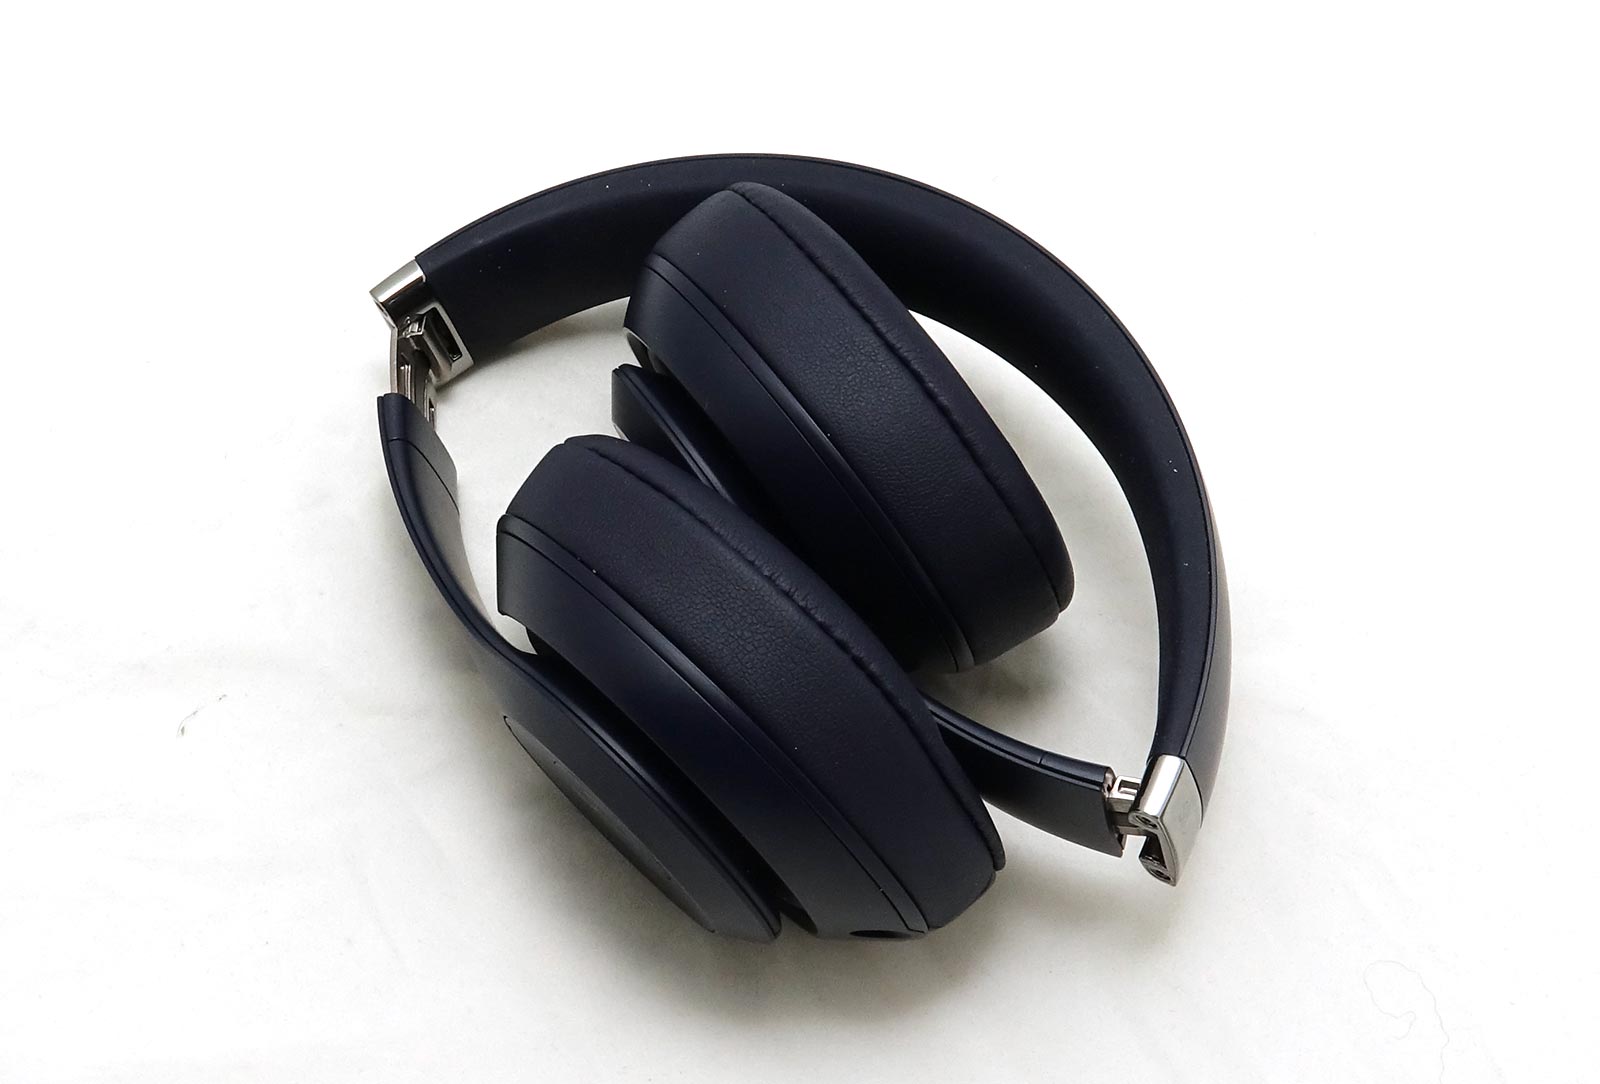 Review: Beats Studio 3 Wireless noise 